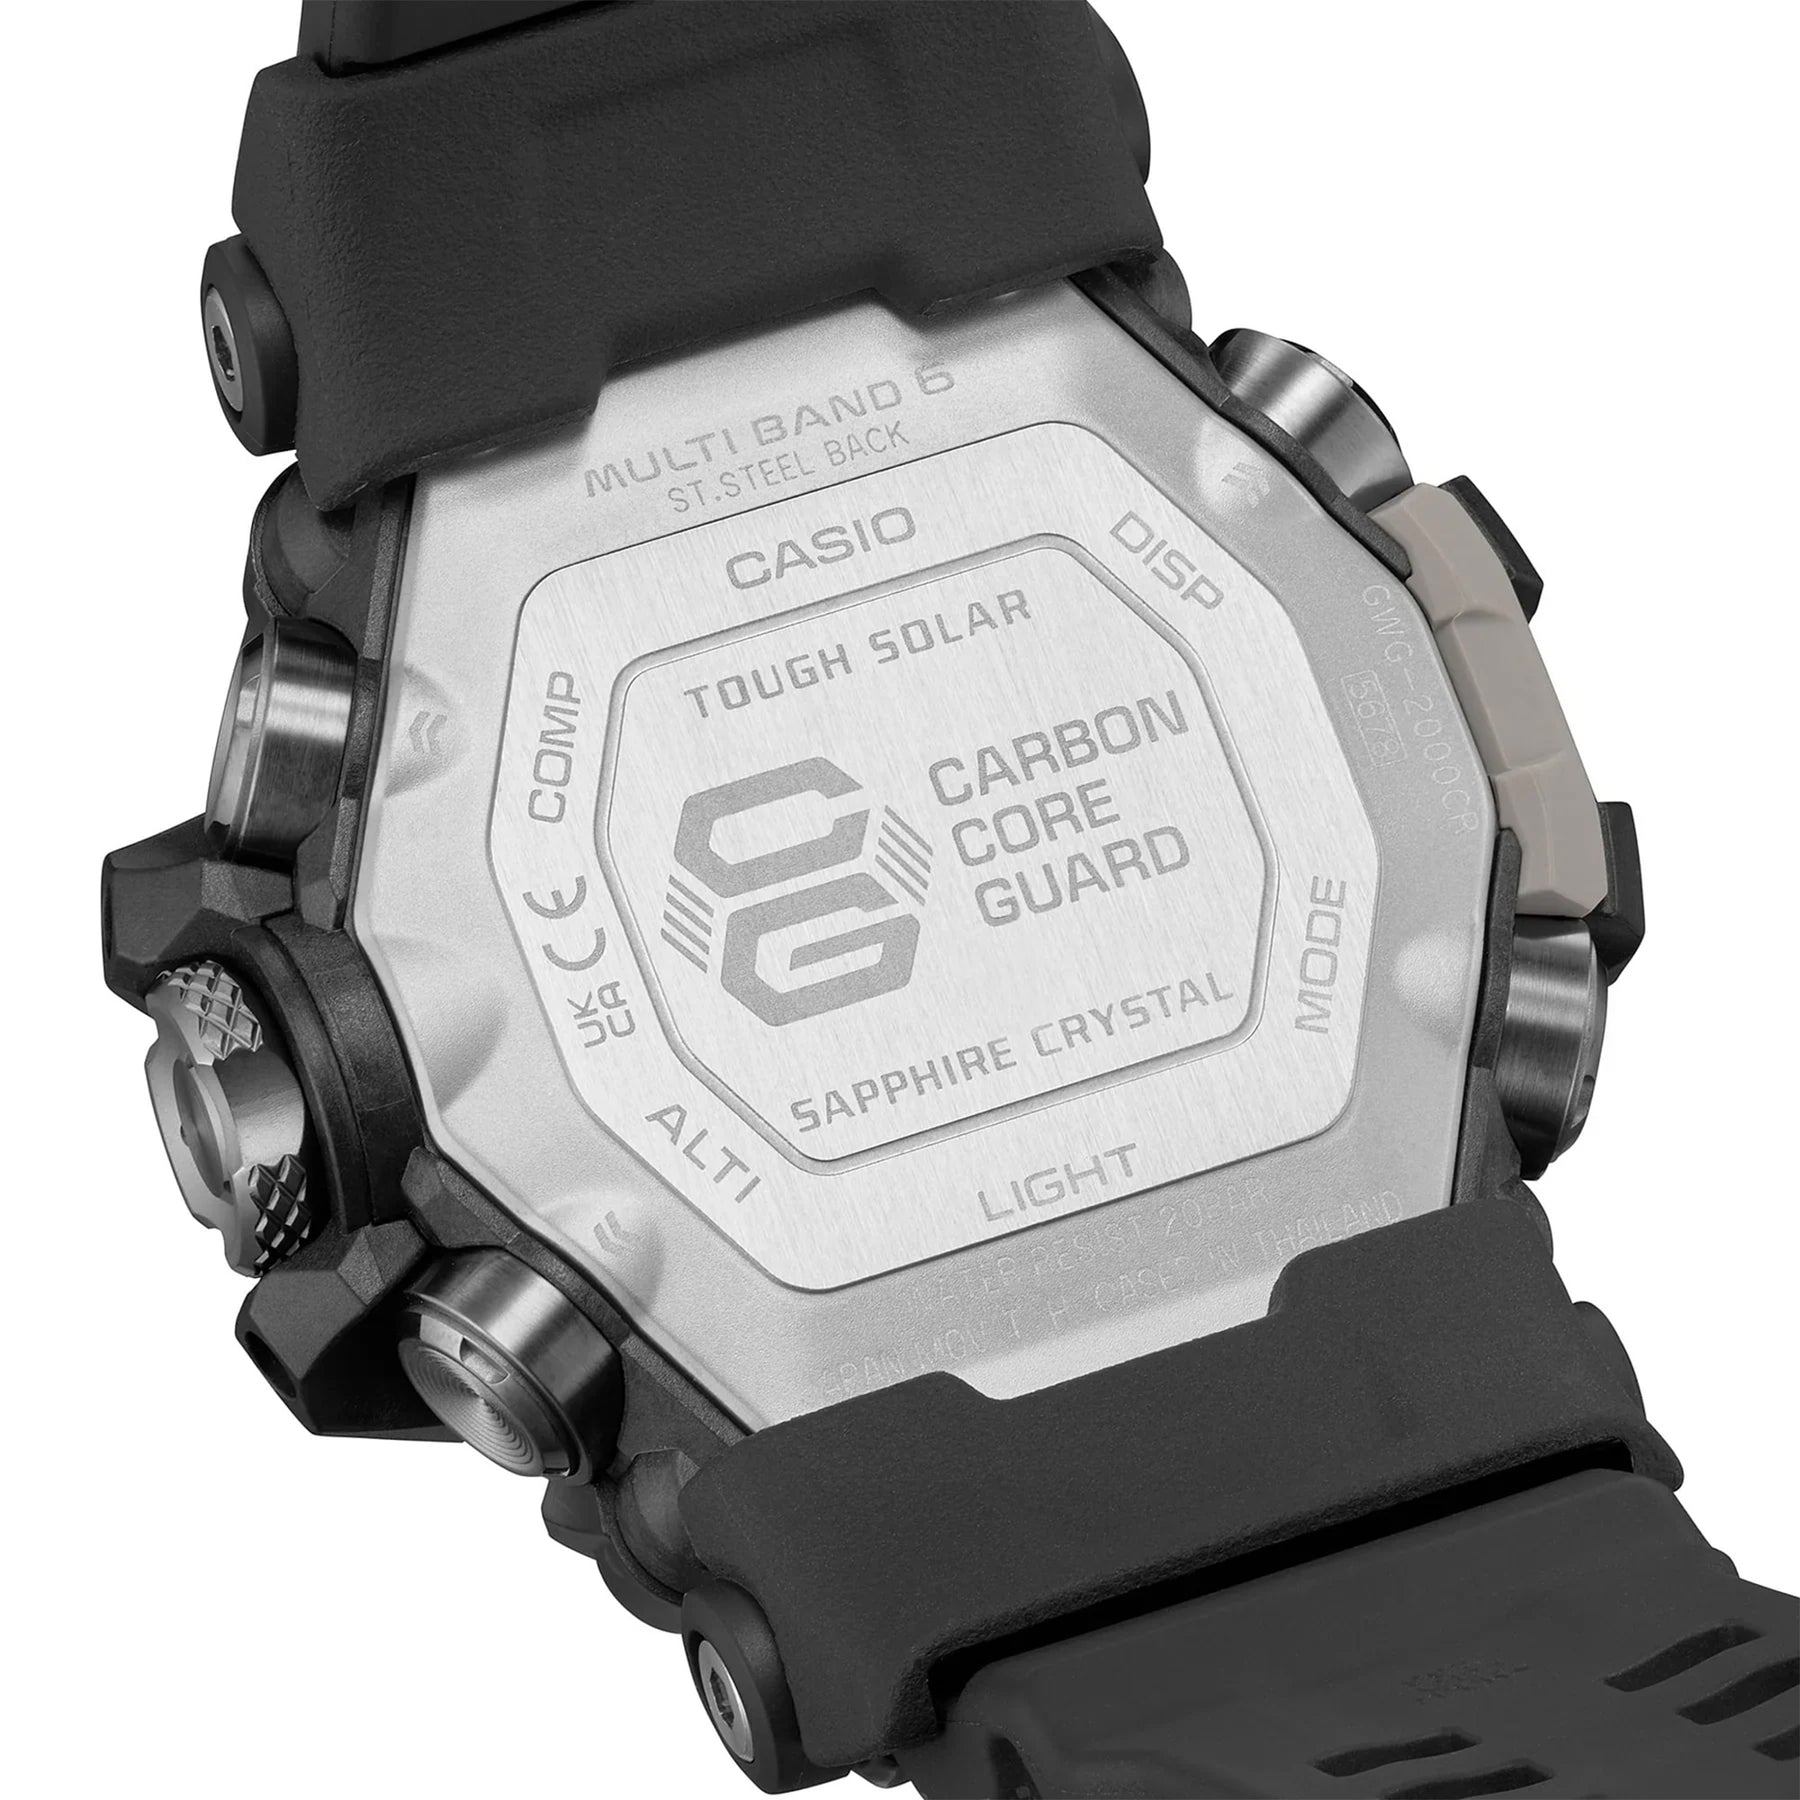 Casio G-SHOCK Men's 54mm Analogue Digital Watch GWG2000CR-1A